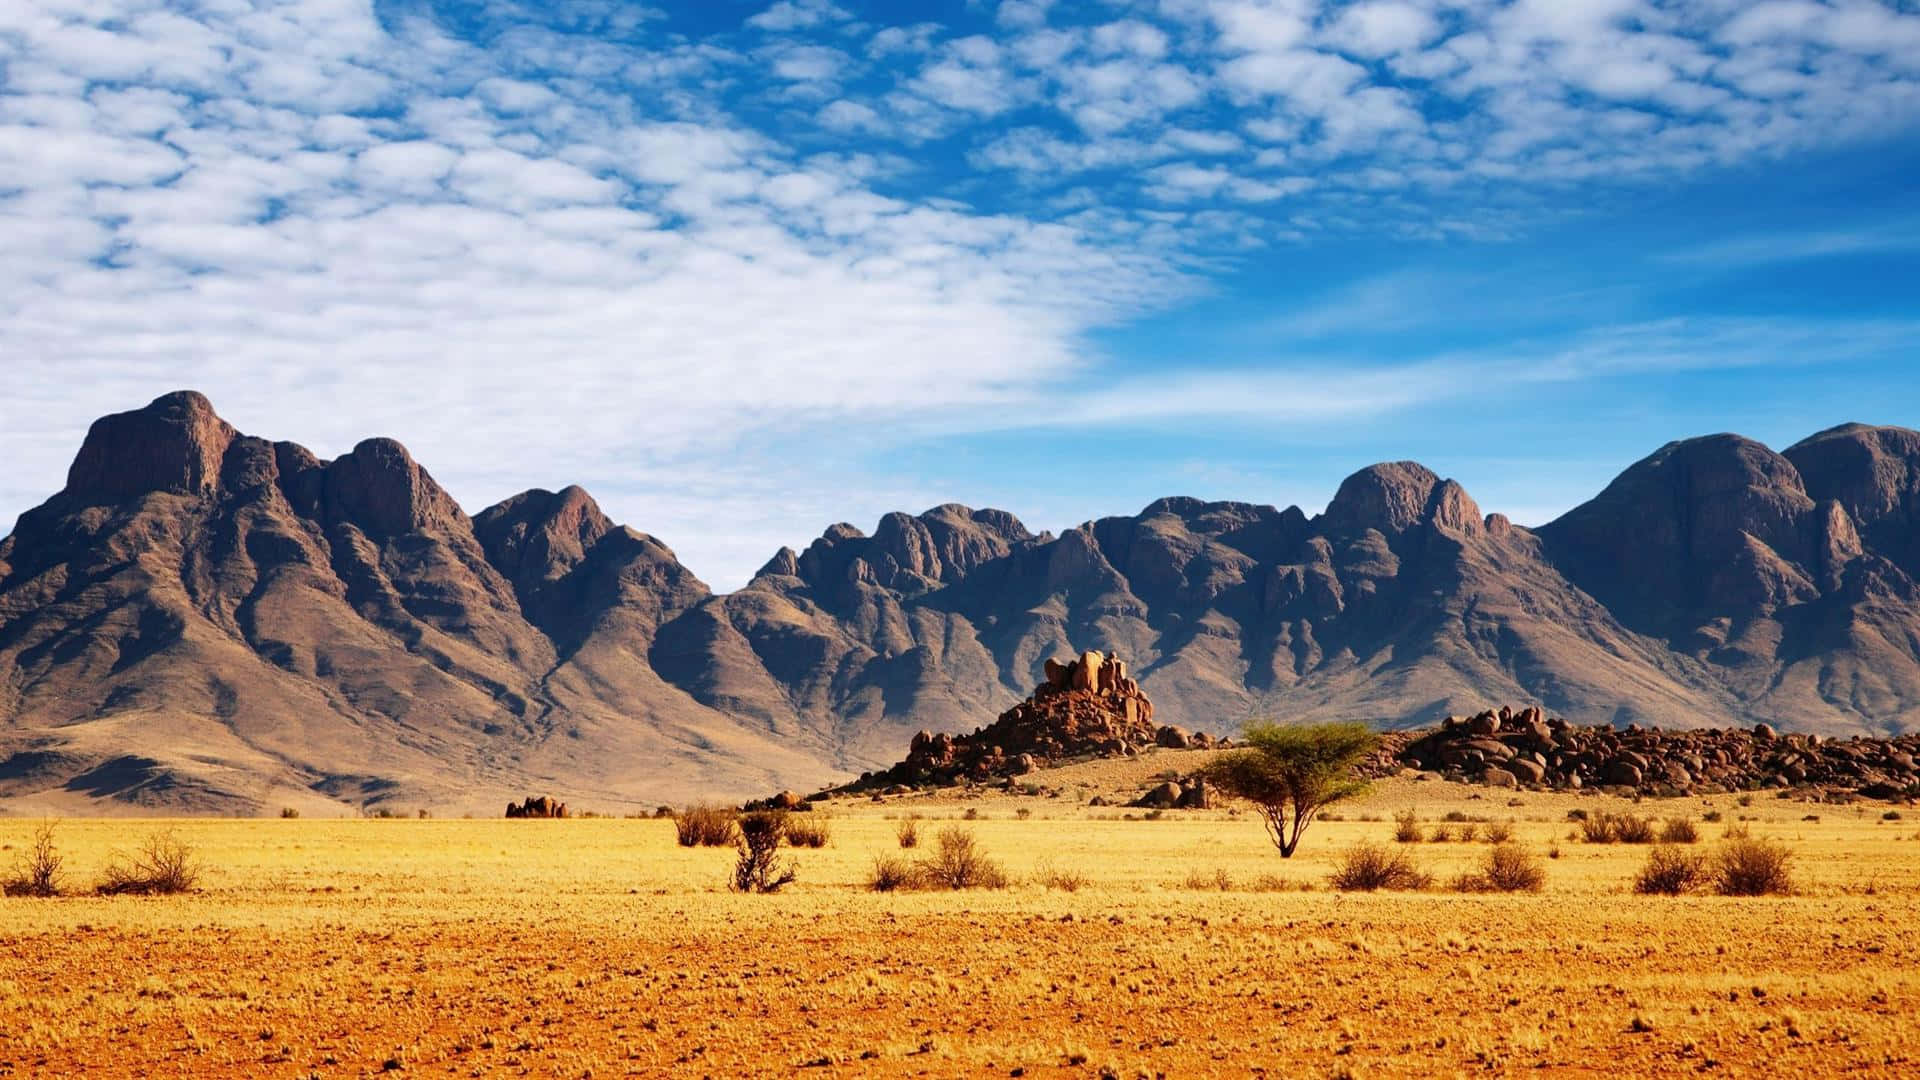 Desert Mountains On Safari Background